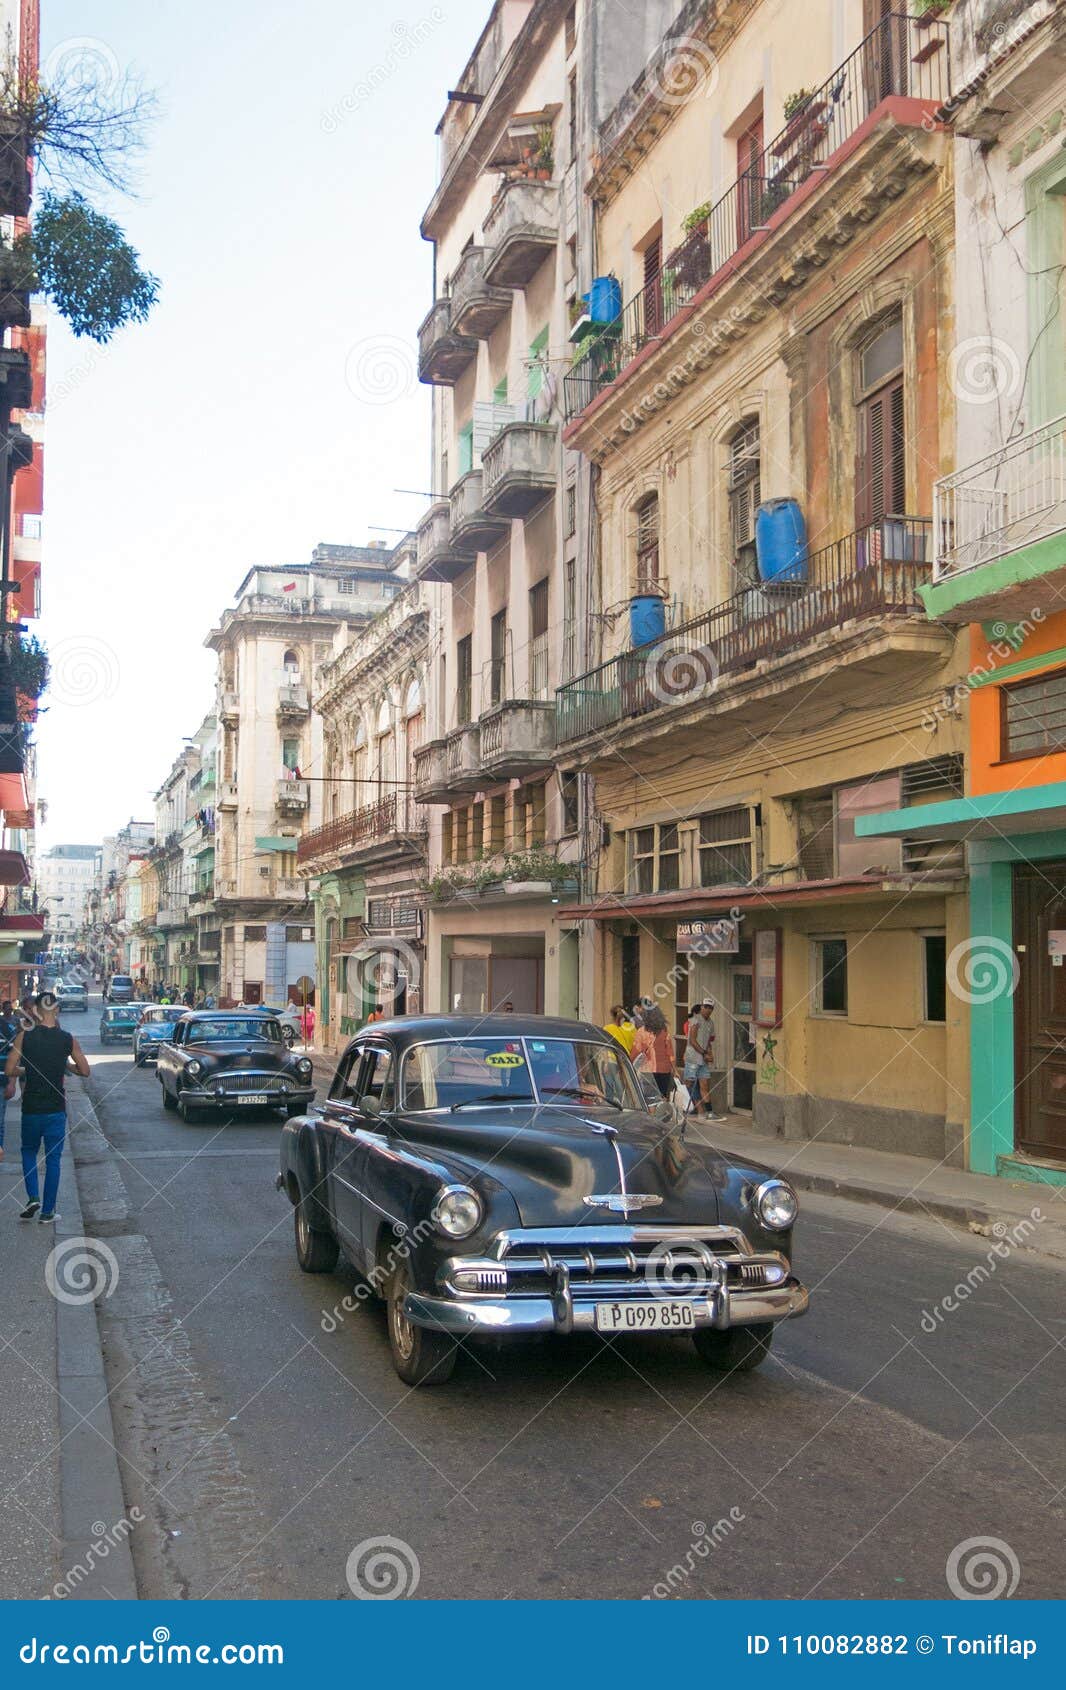 HAVANA, CUBA - JANUARY 16, 2017: Street scene with old american car in downtown Havana, Cuba